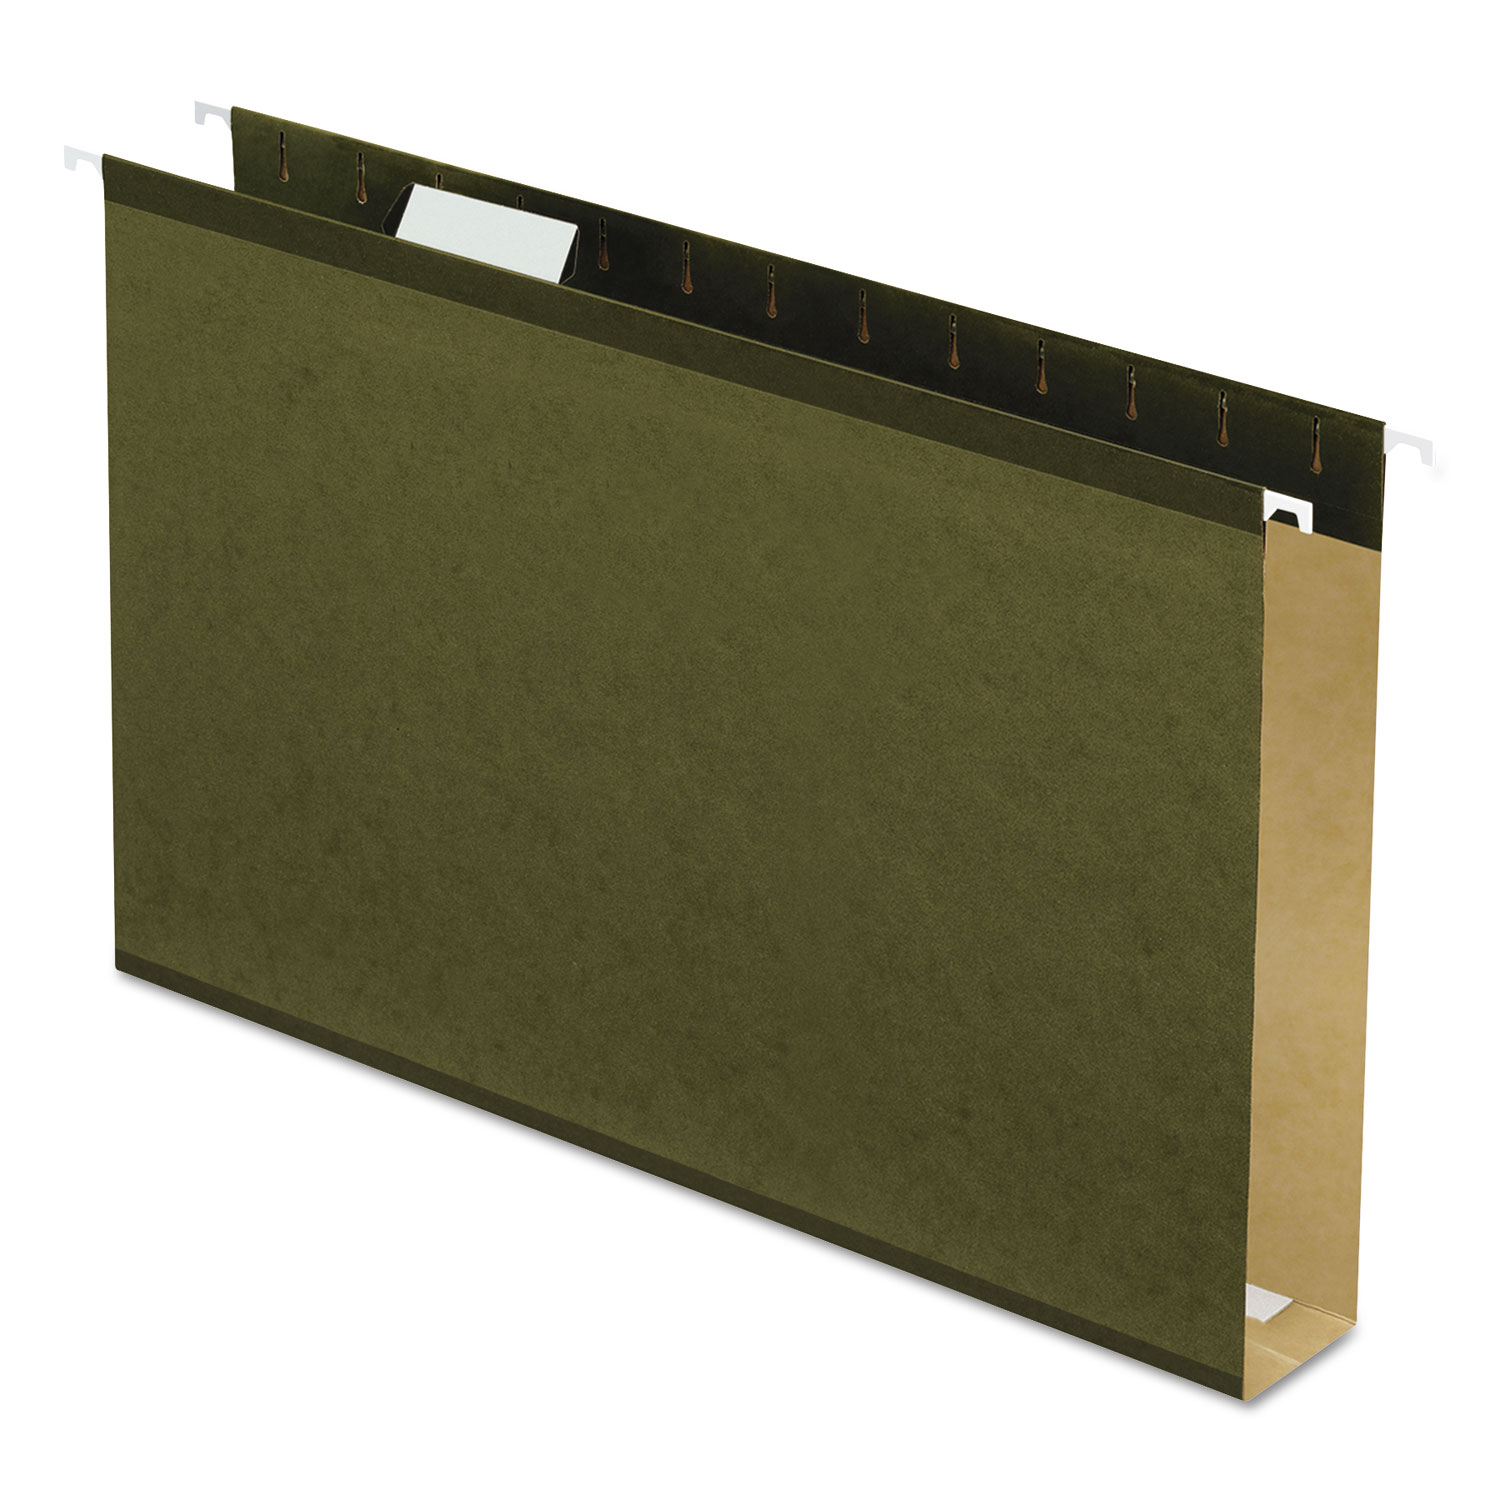  Pendaflex 5143X2 Extra Capacity Reinforced Hanging File Folders with Box Bottom, Legal Size, 1/5-Cut Tab, Standard Green, 25/Box (PFX5143X2) 